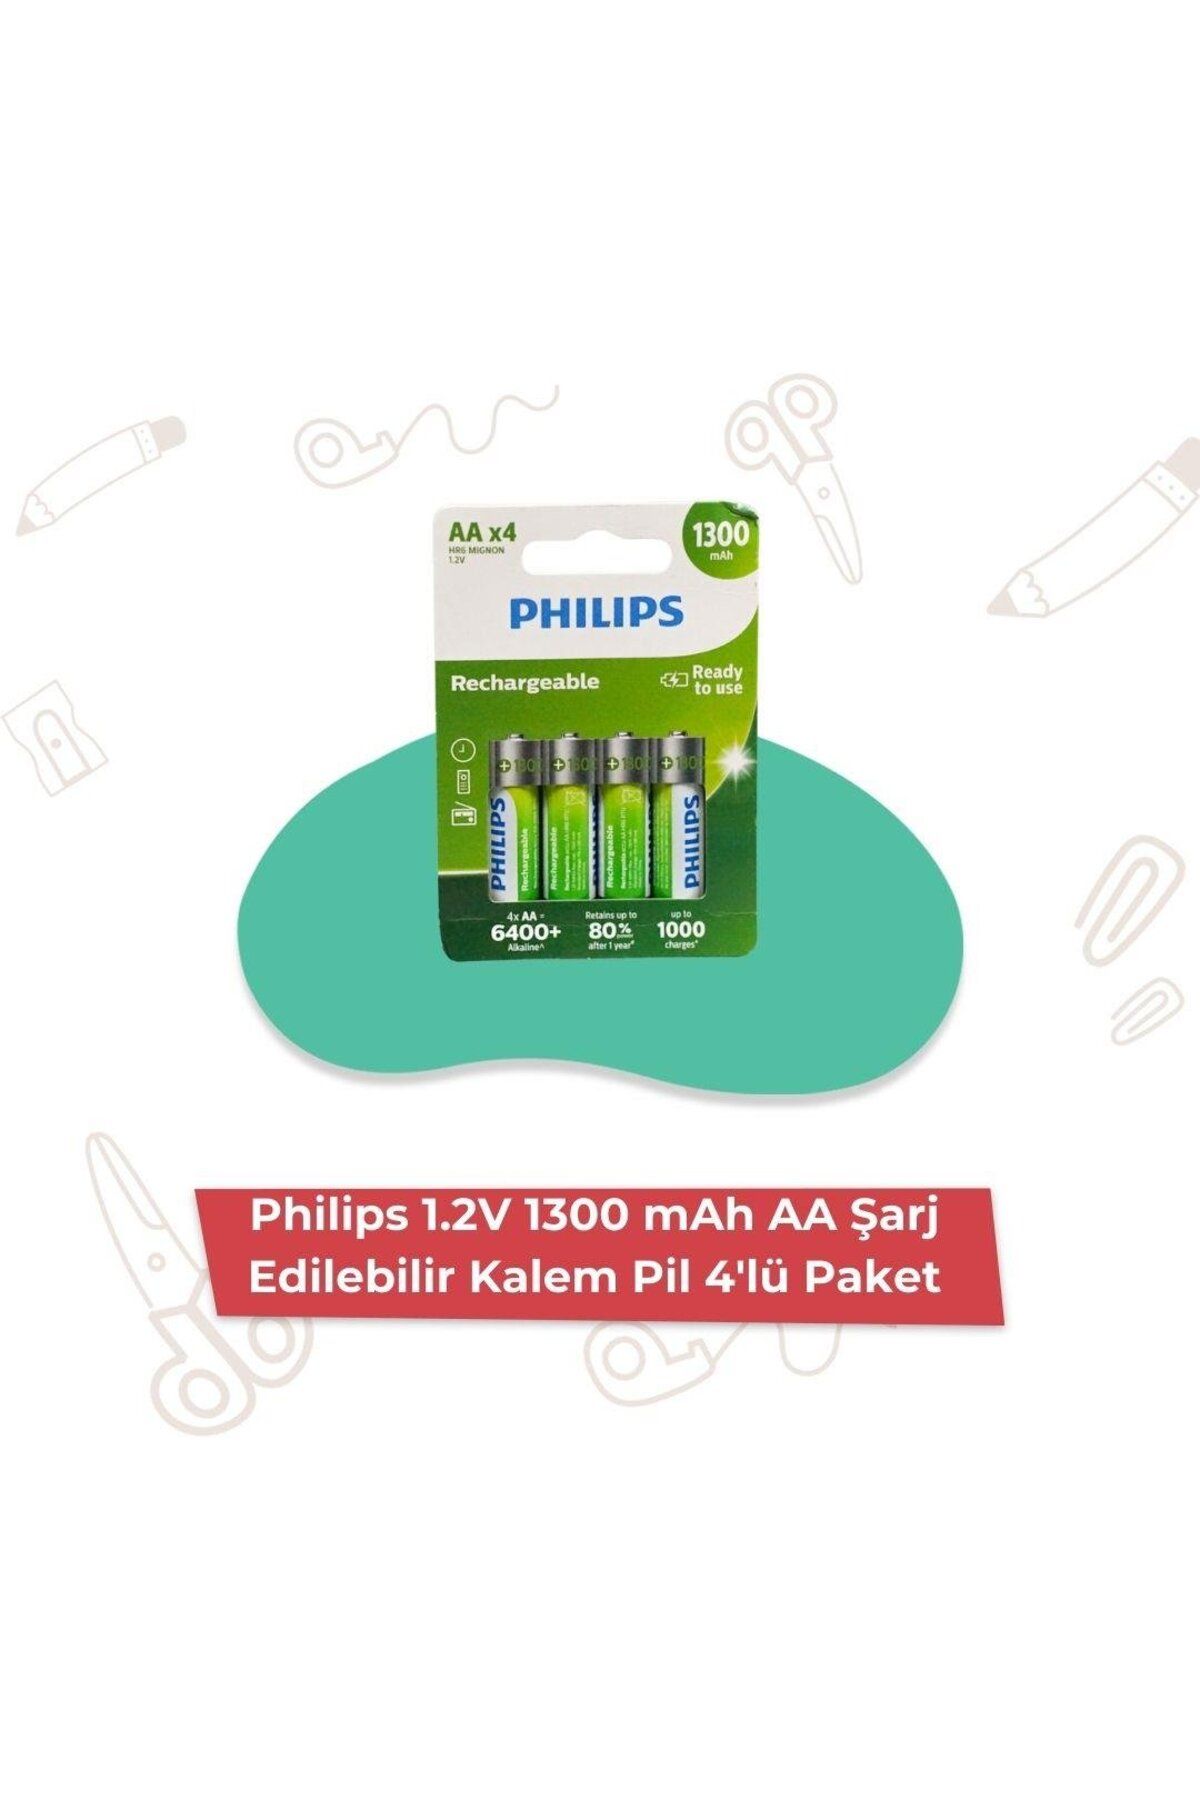 Philips 1.2V 1300 mAh AA Şarj Edilebilir Kalem Pil 4'lü Paket R6B4A130/10